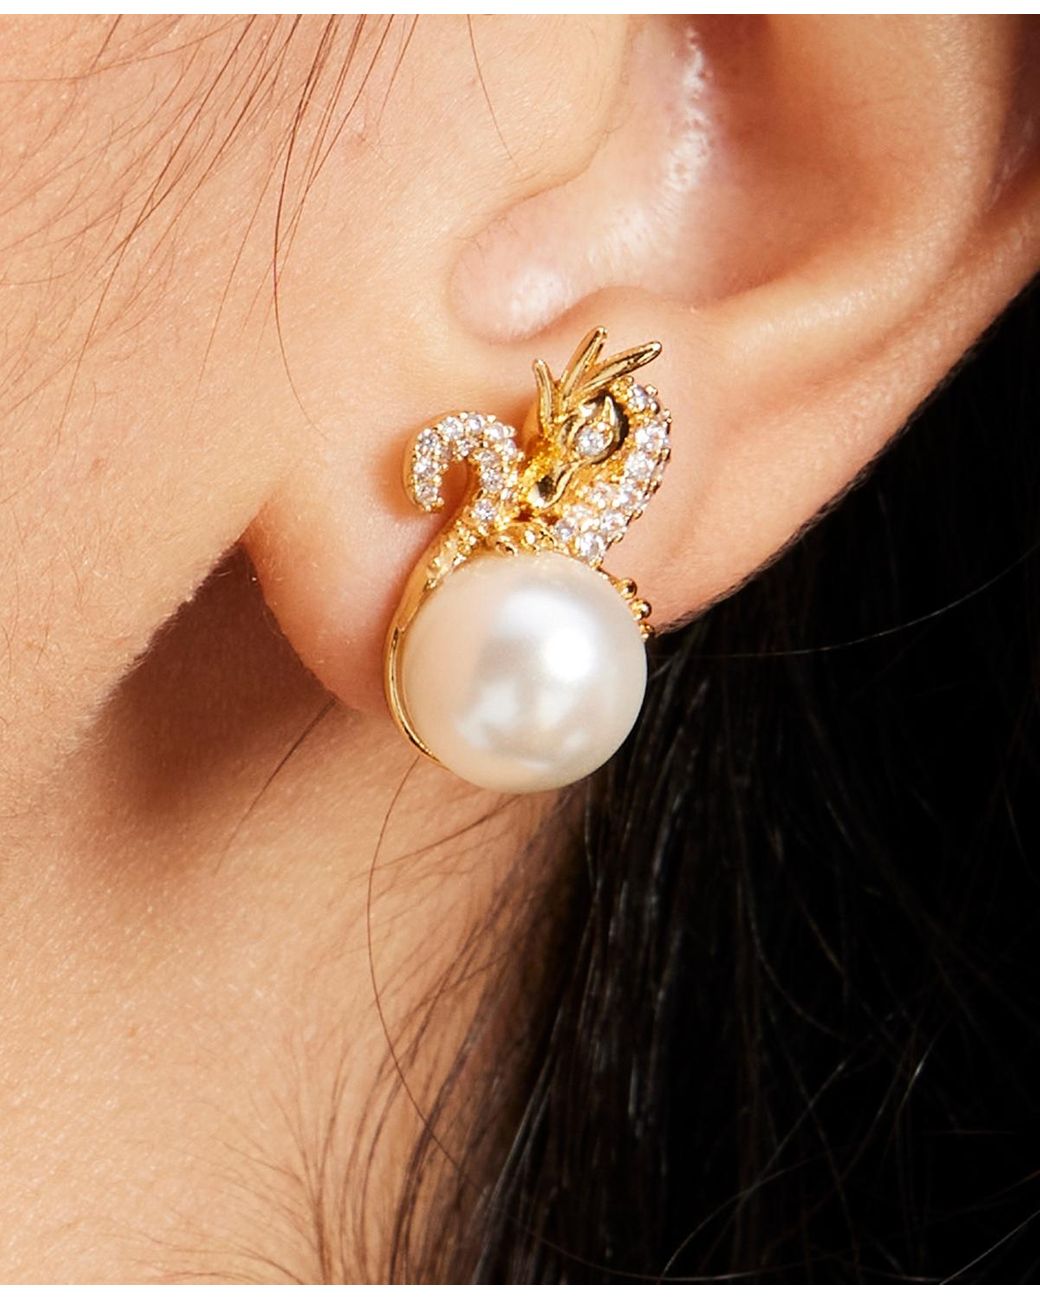 Aggregate more than 114 kate spade double pearl earrings